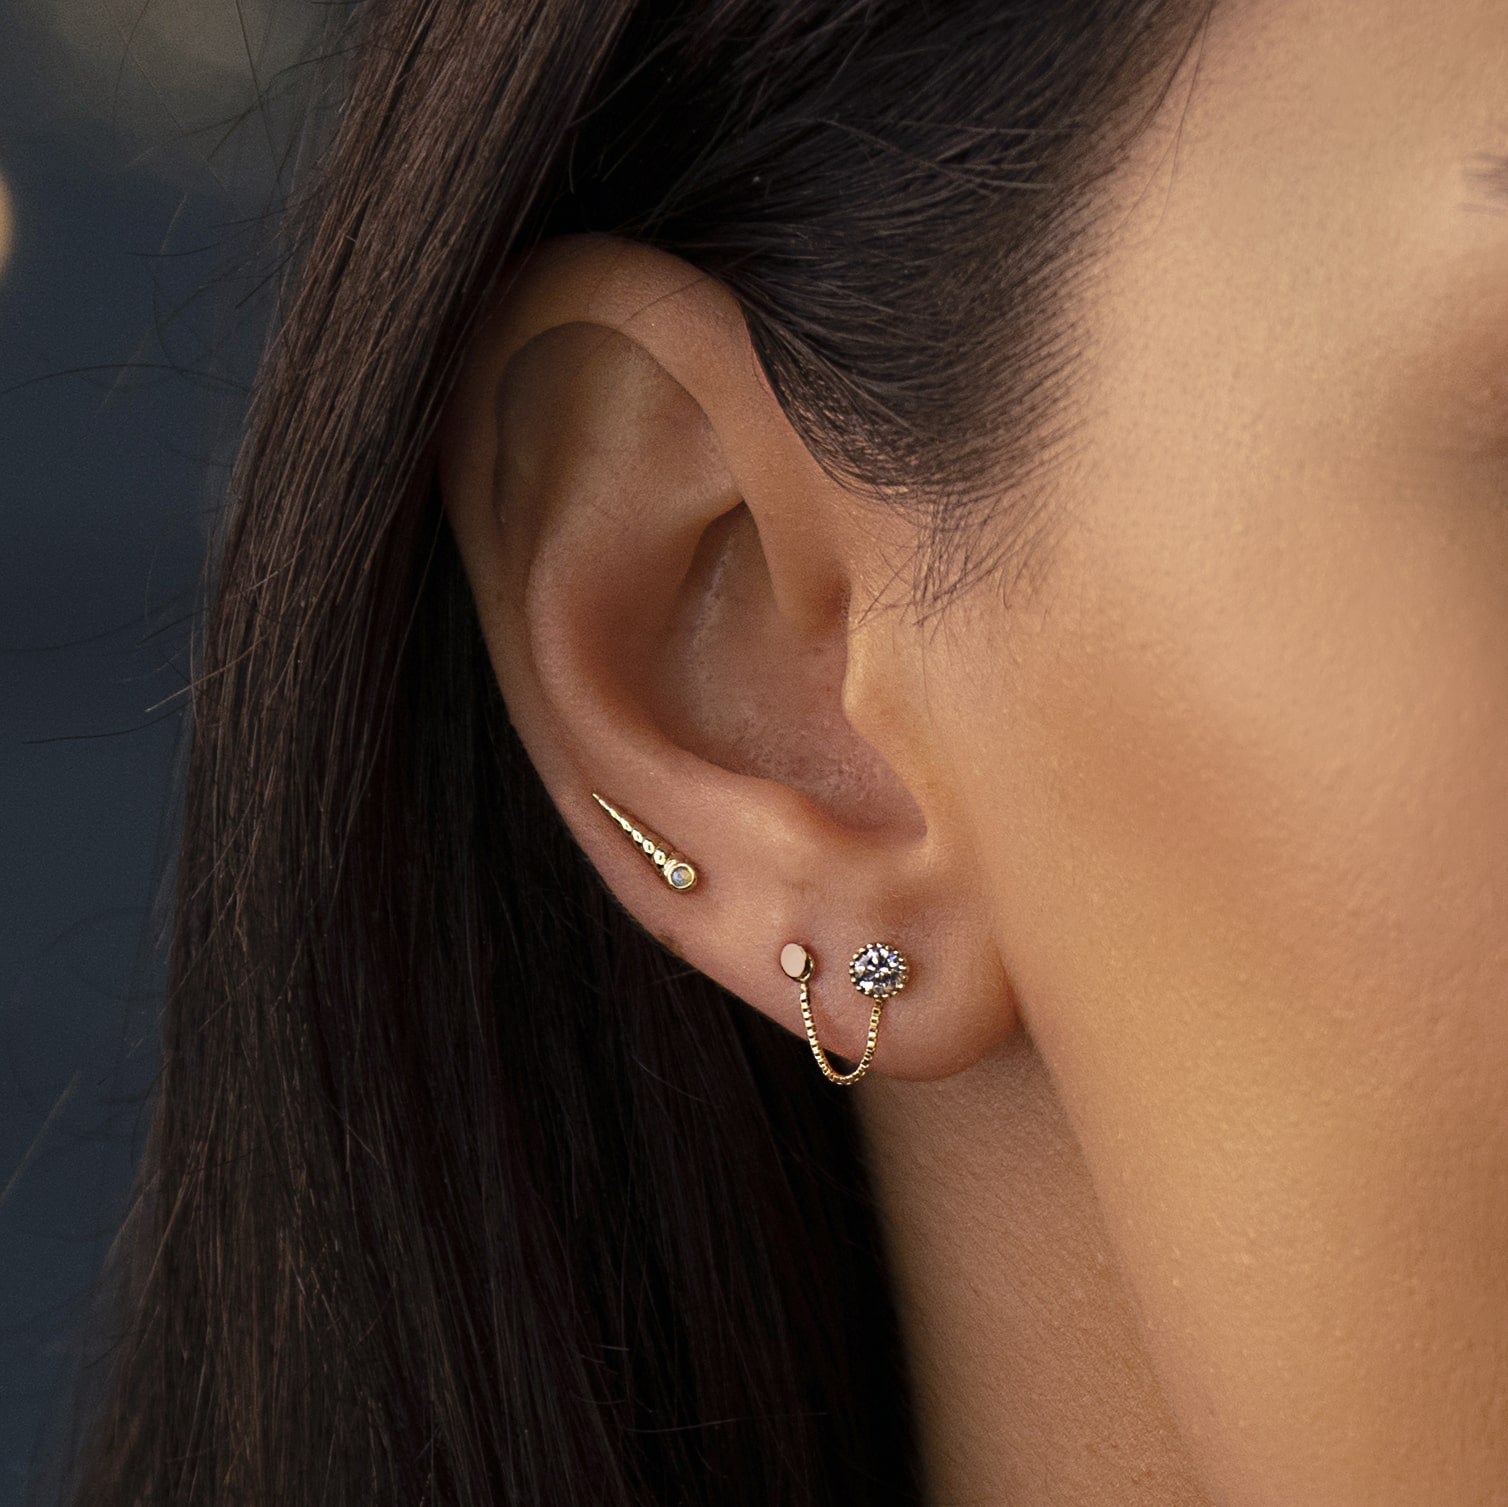 Titanium Flat Back Earrings • Titanium Earrings Shop